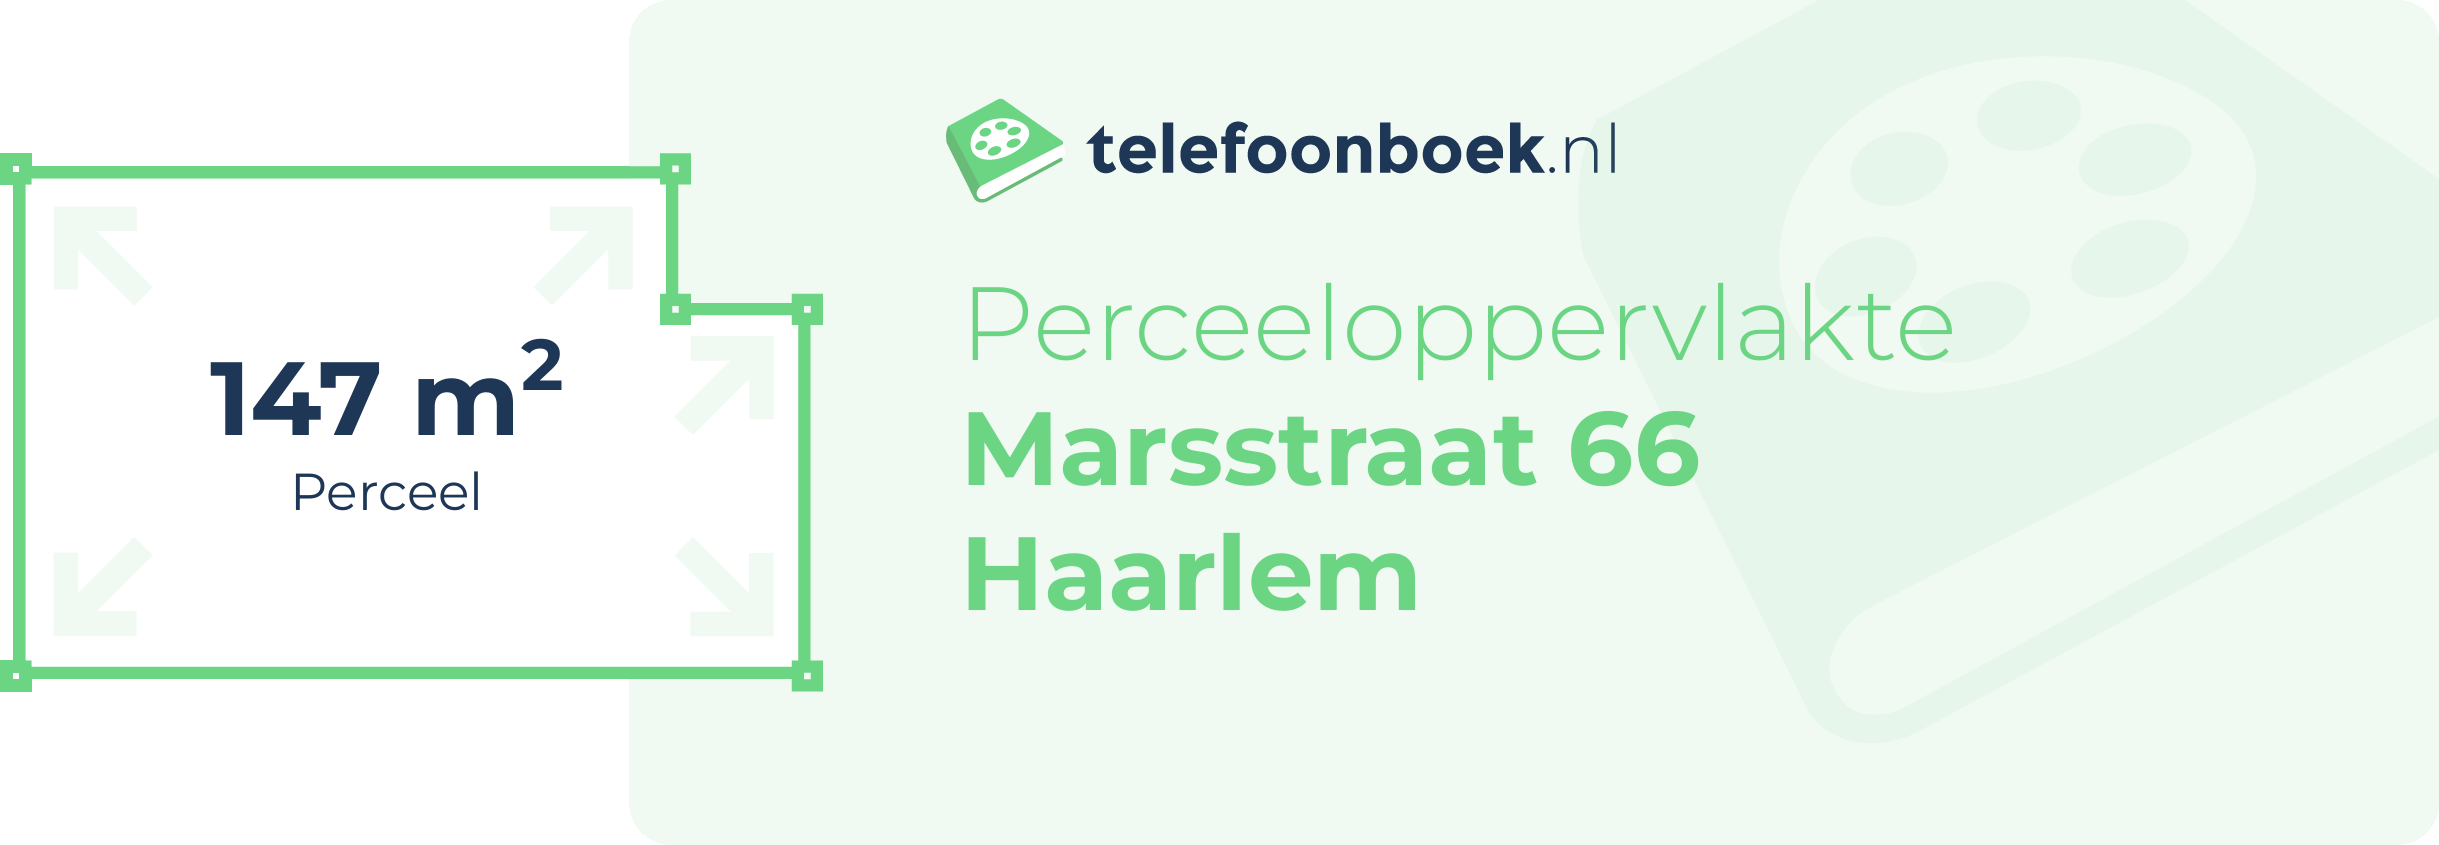 Perceeloppervlakte Marsstraat 66 Haarlem